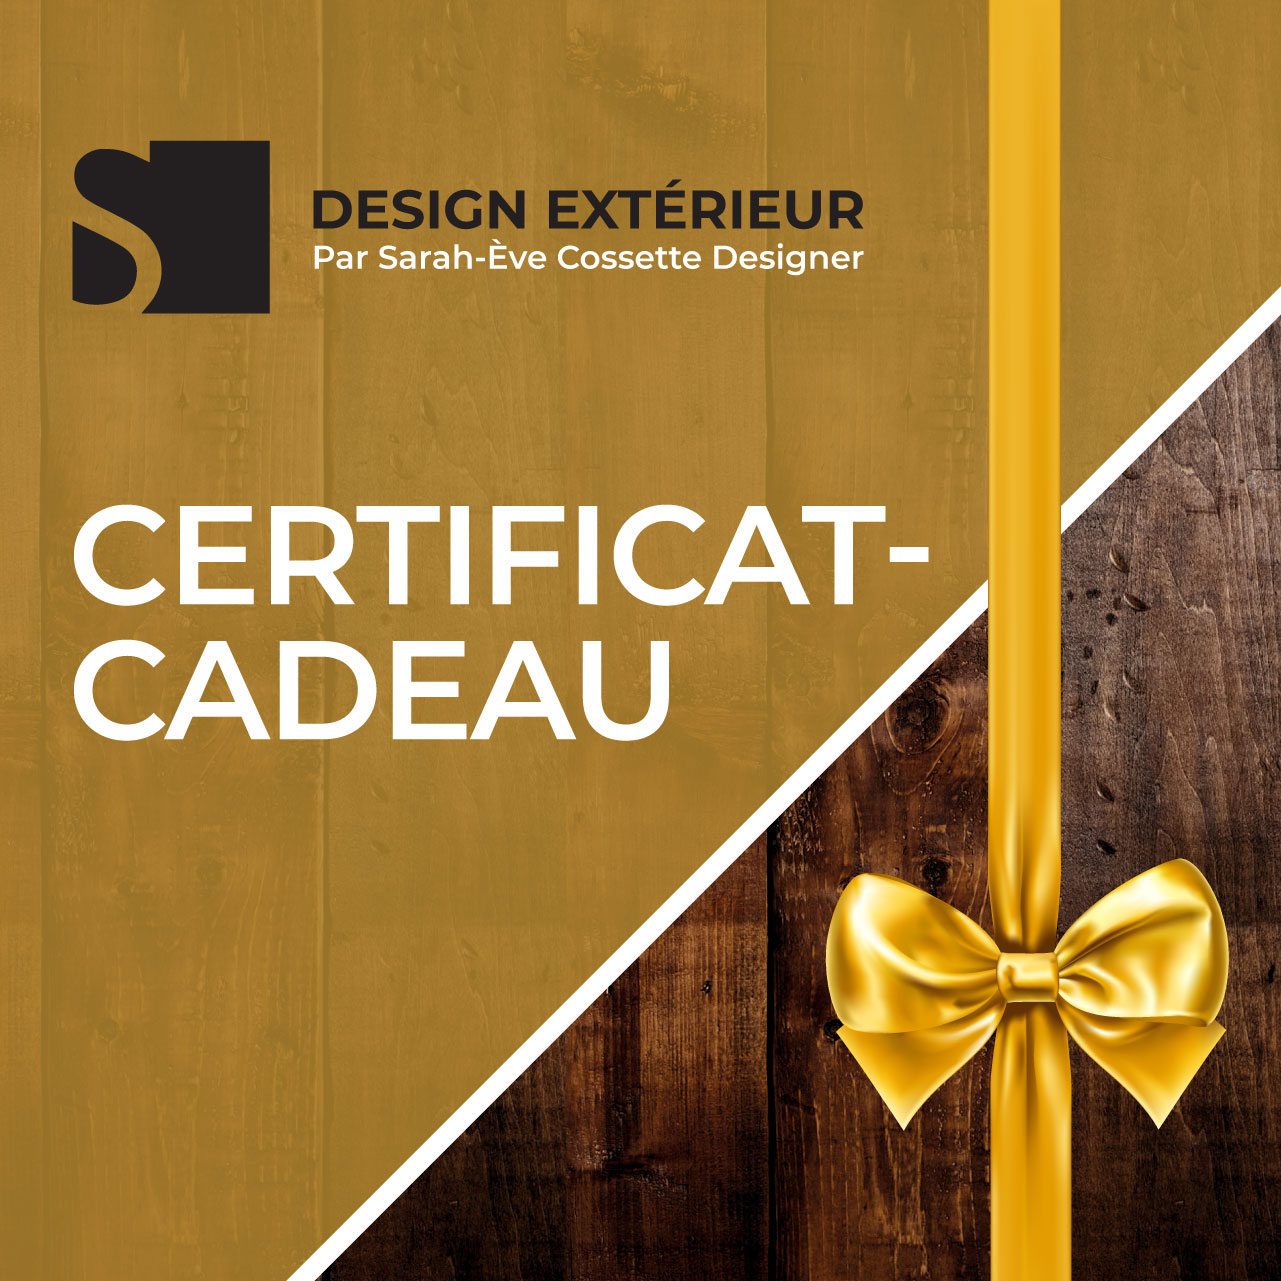 Certificat cadeau virtuel Designer exterieur